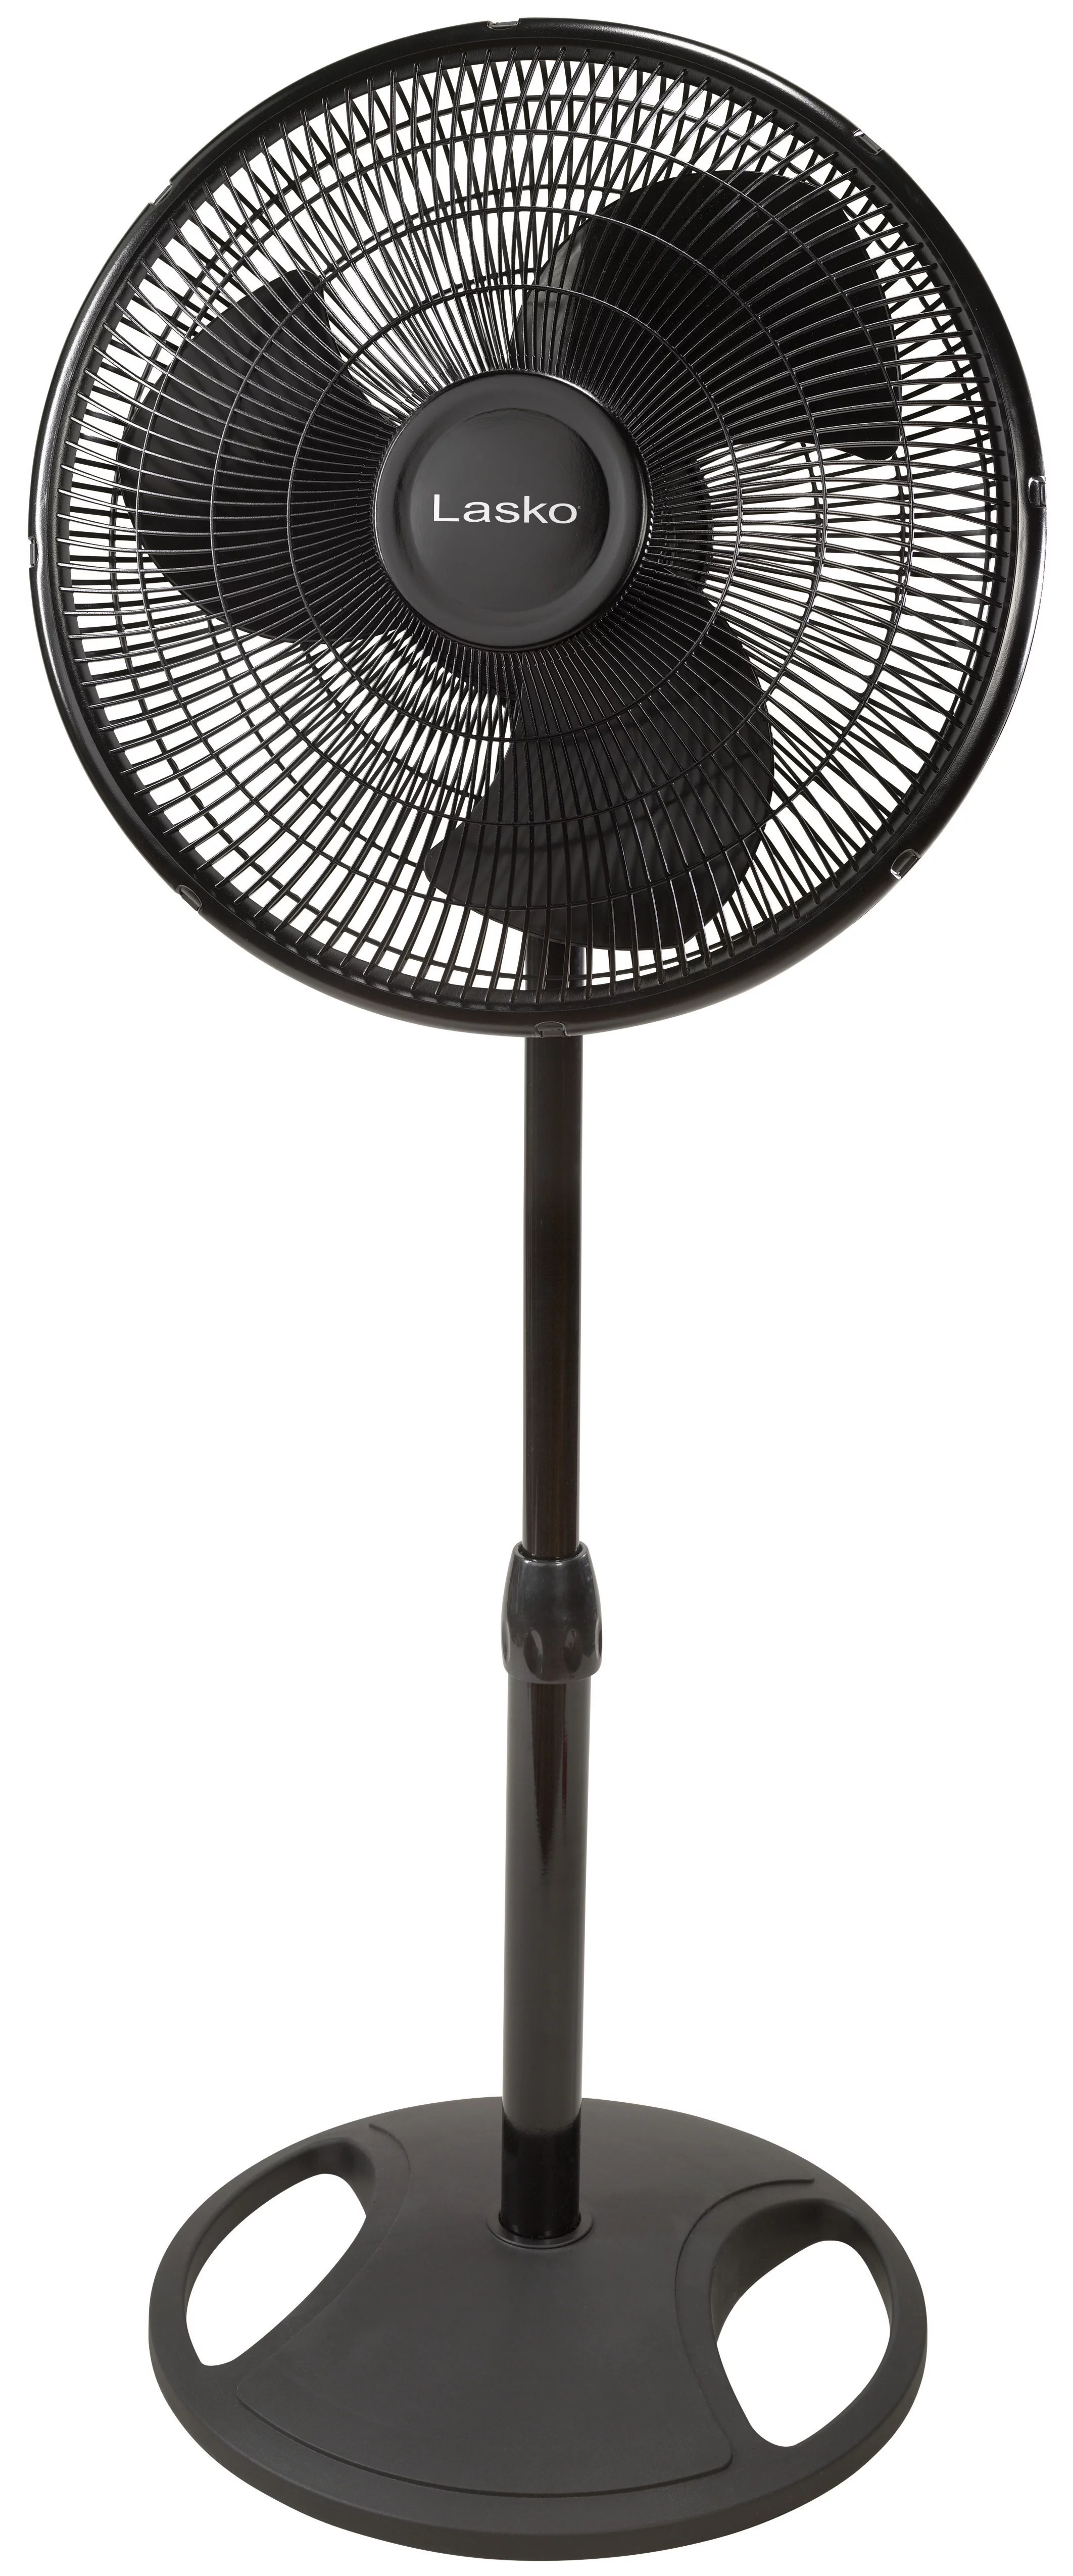 Lasko 16" Oscillating Pedestal Stand 3-Speed Fan, S16500, Black